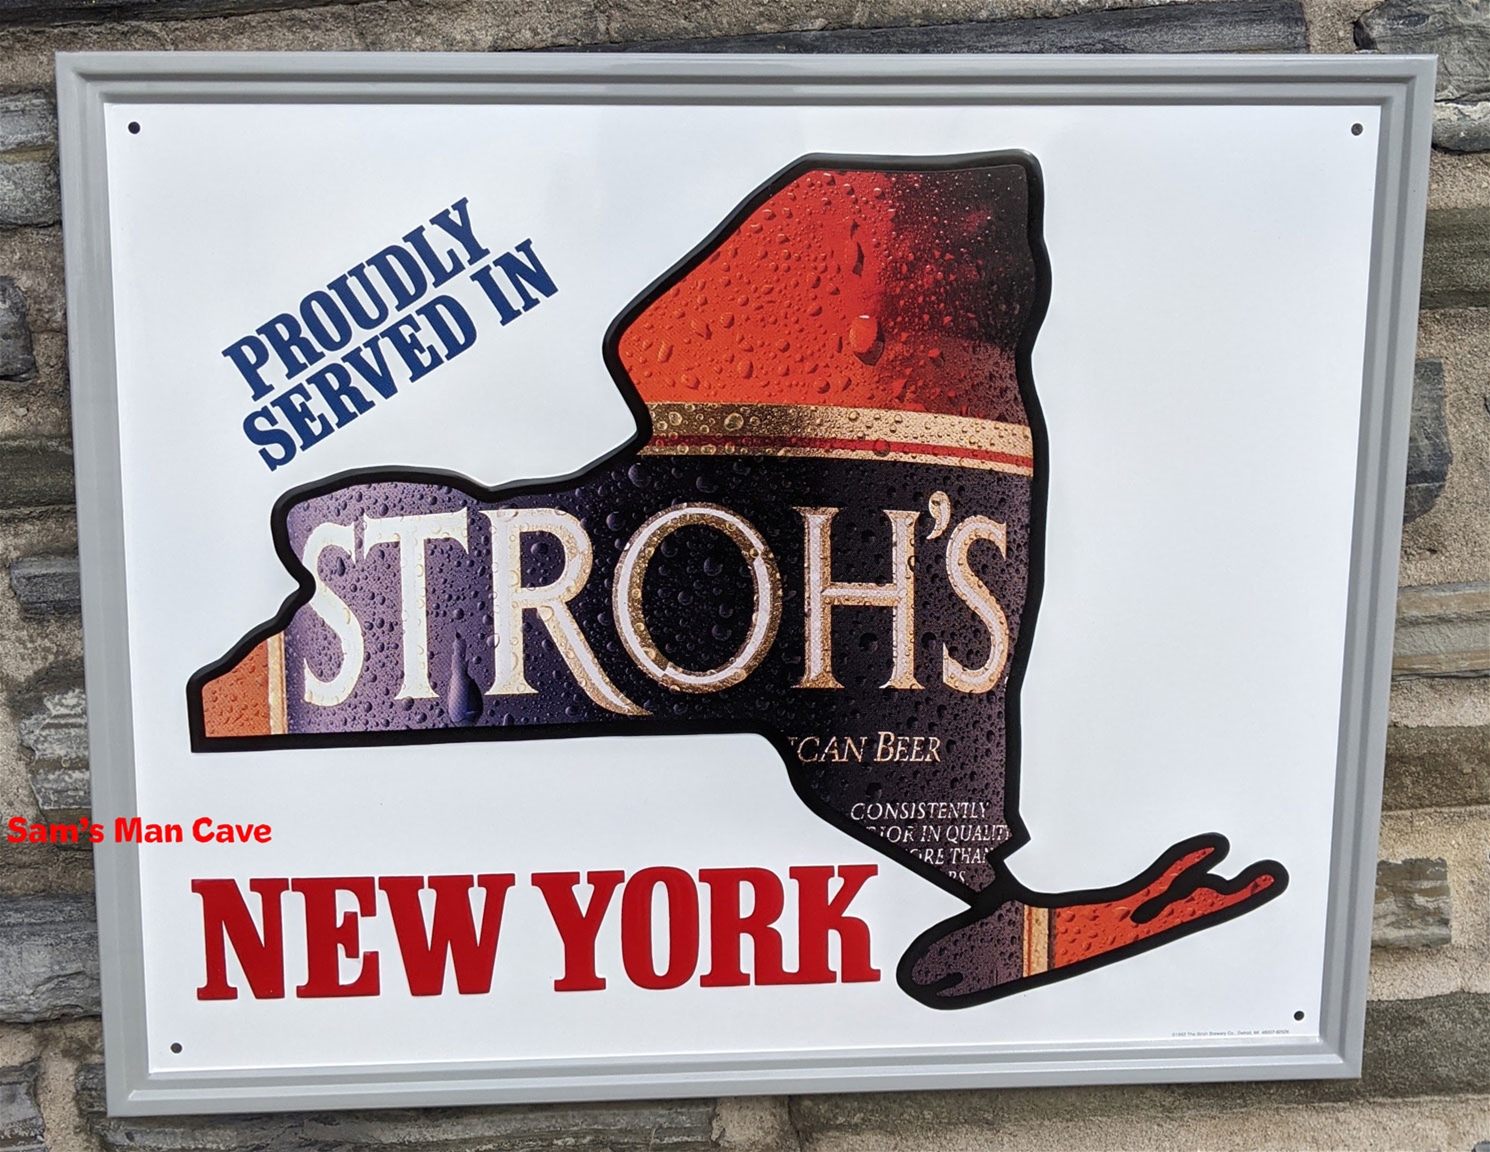 Stroh's New York Tin Sign